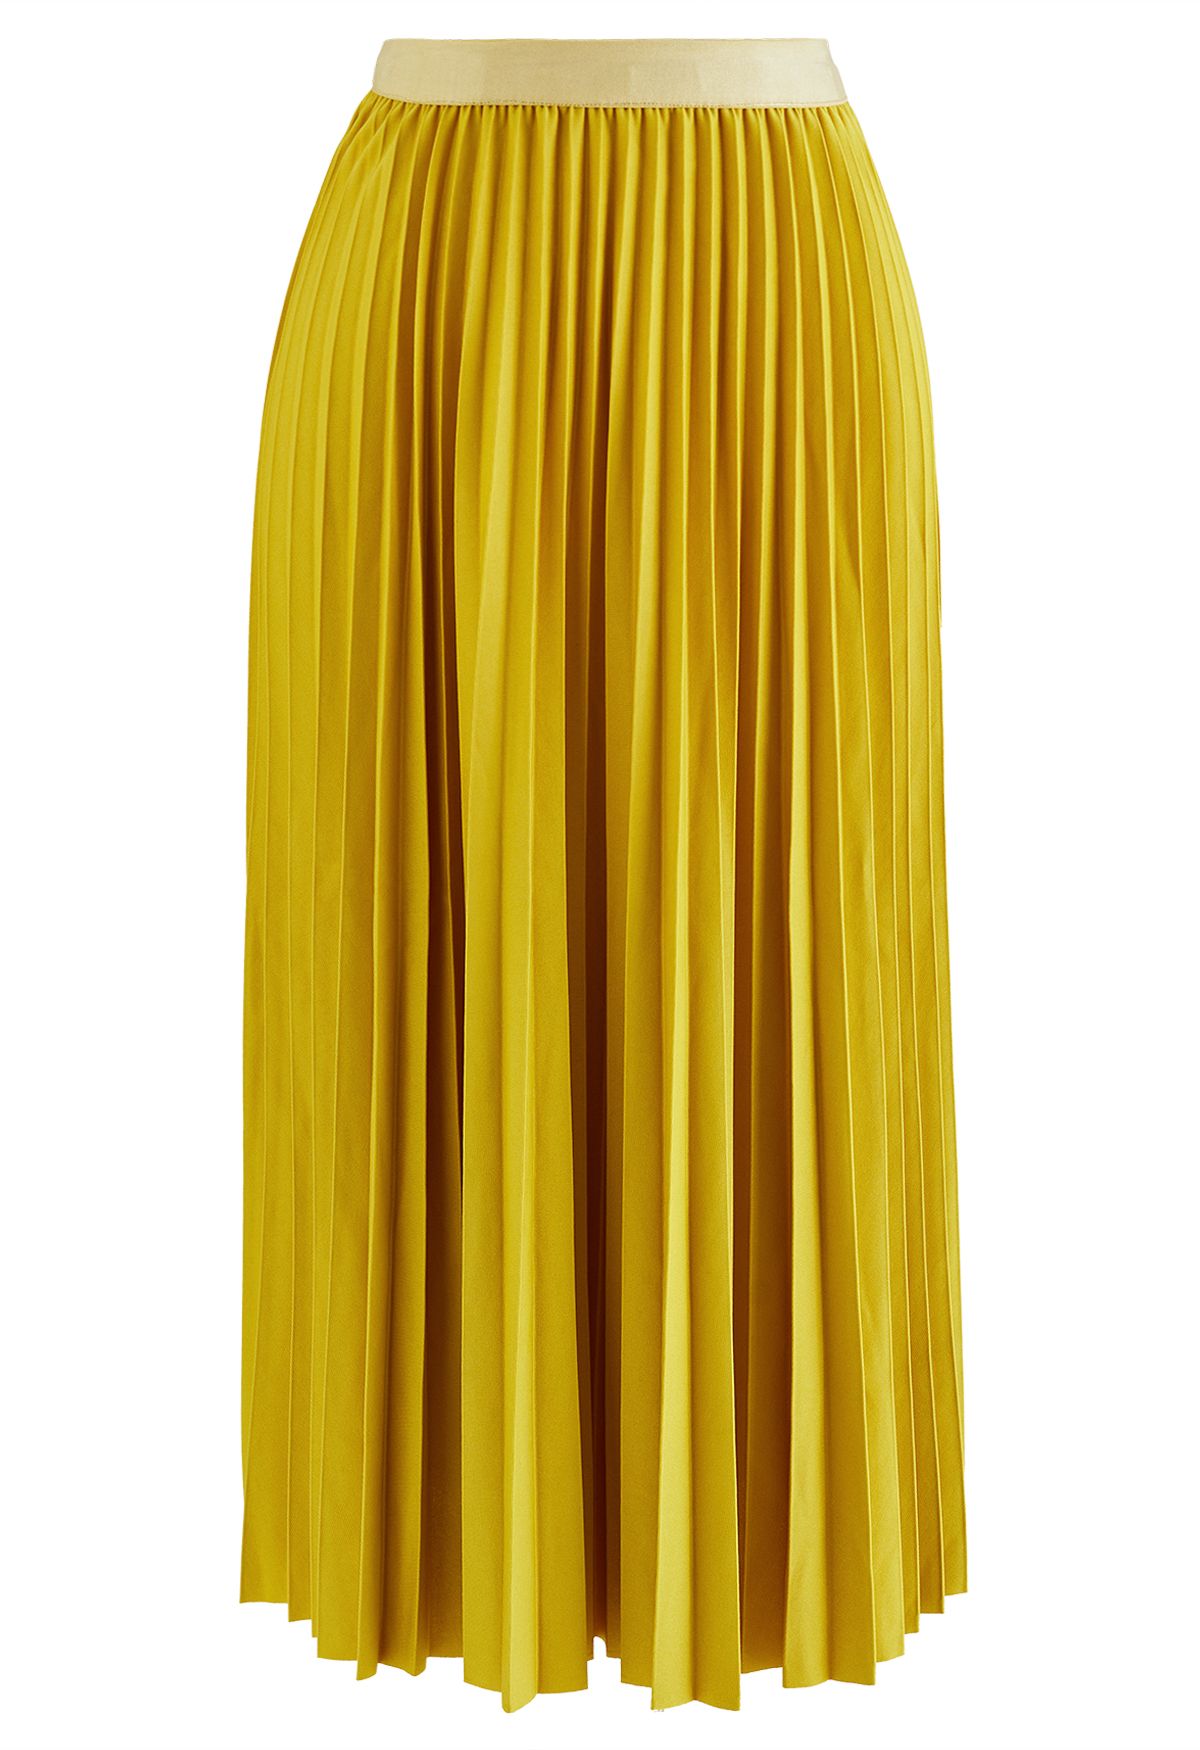 Simplicity Pleated Midi Skirt in Mustard - Retro, Indie and Unique Fashion